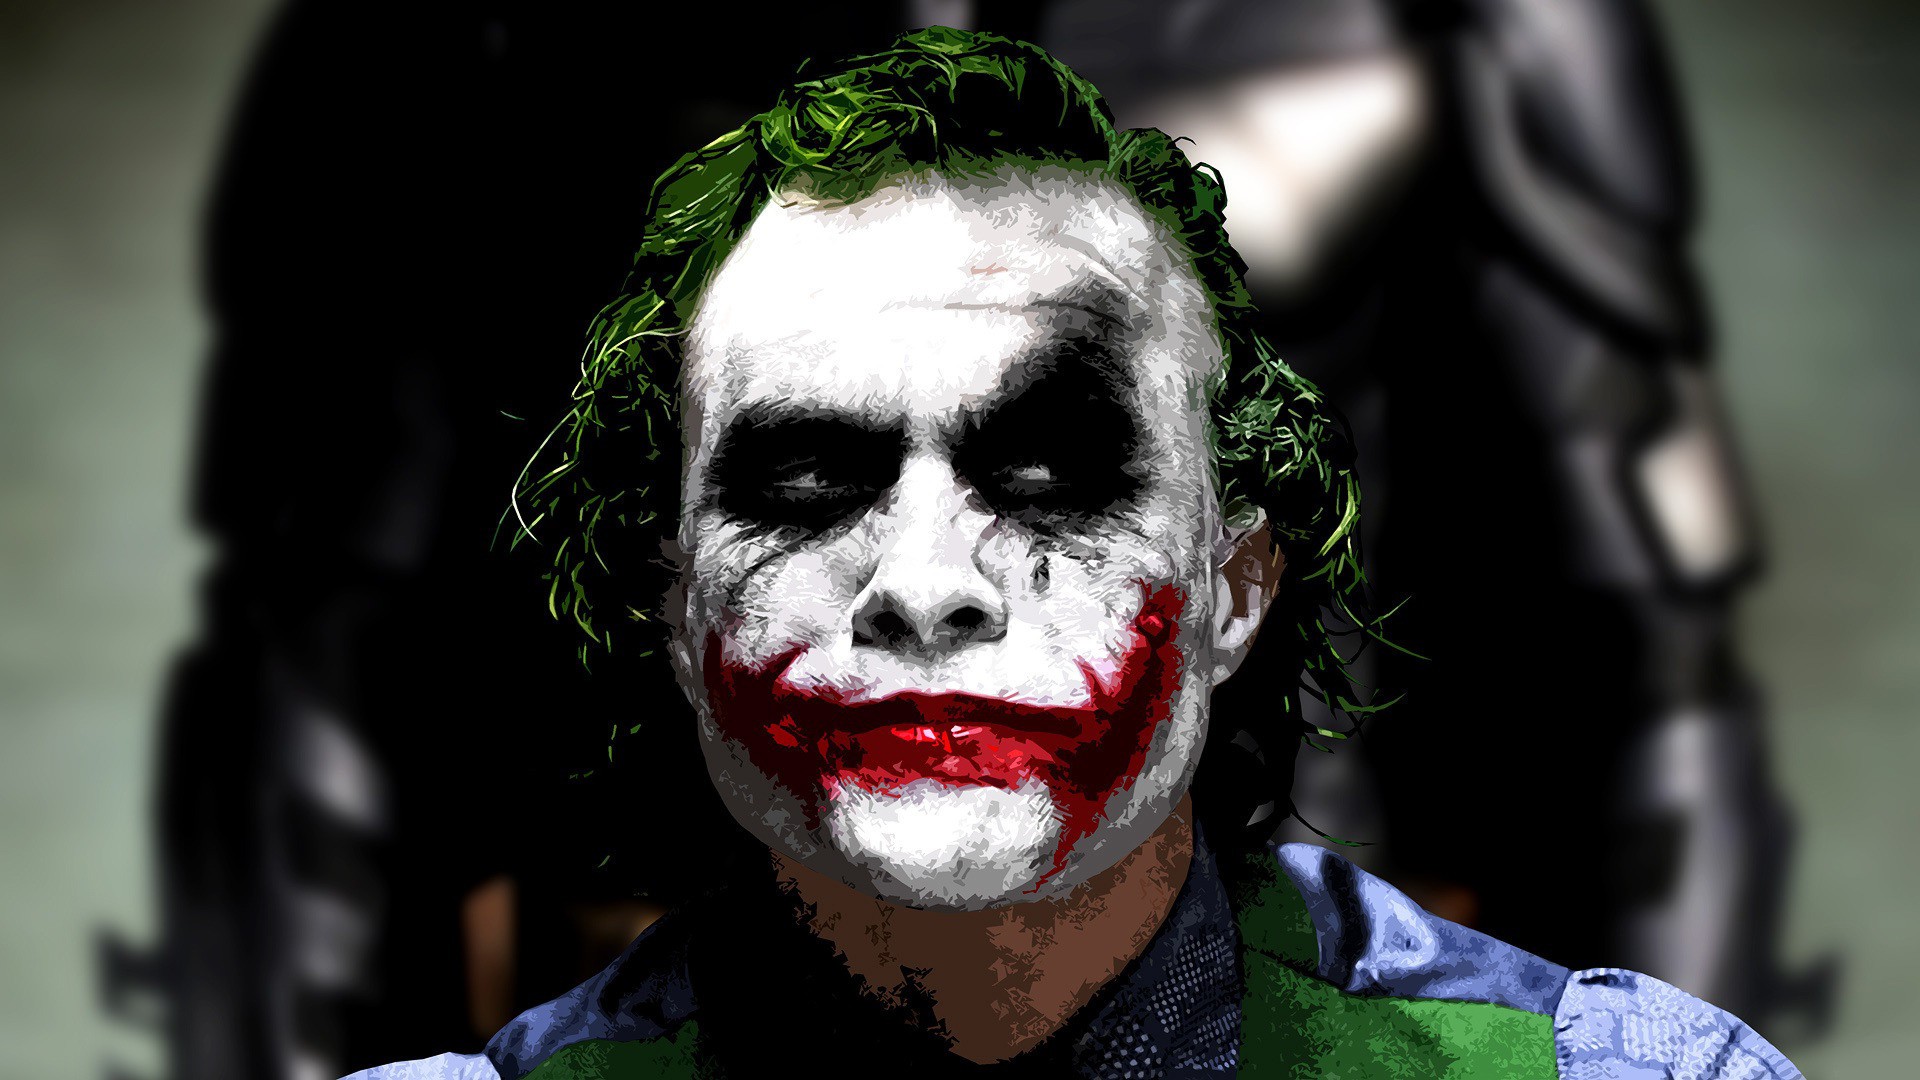 General 1920x1080 Joker The Dark Knight Heath Ledger movies MessenjahMatt face paint actor deceased Australian villains DC Comics Warner Brothers Christopher Nolan